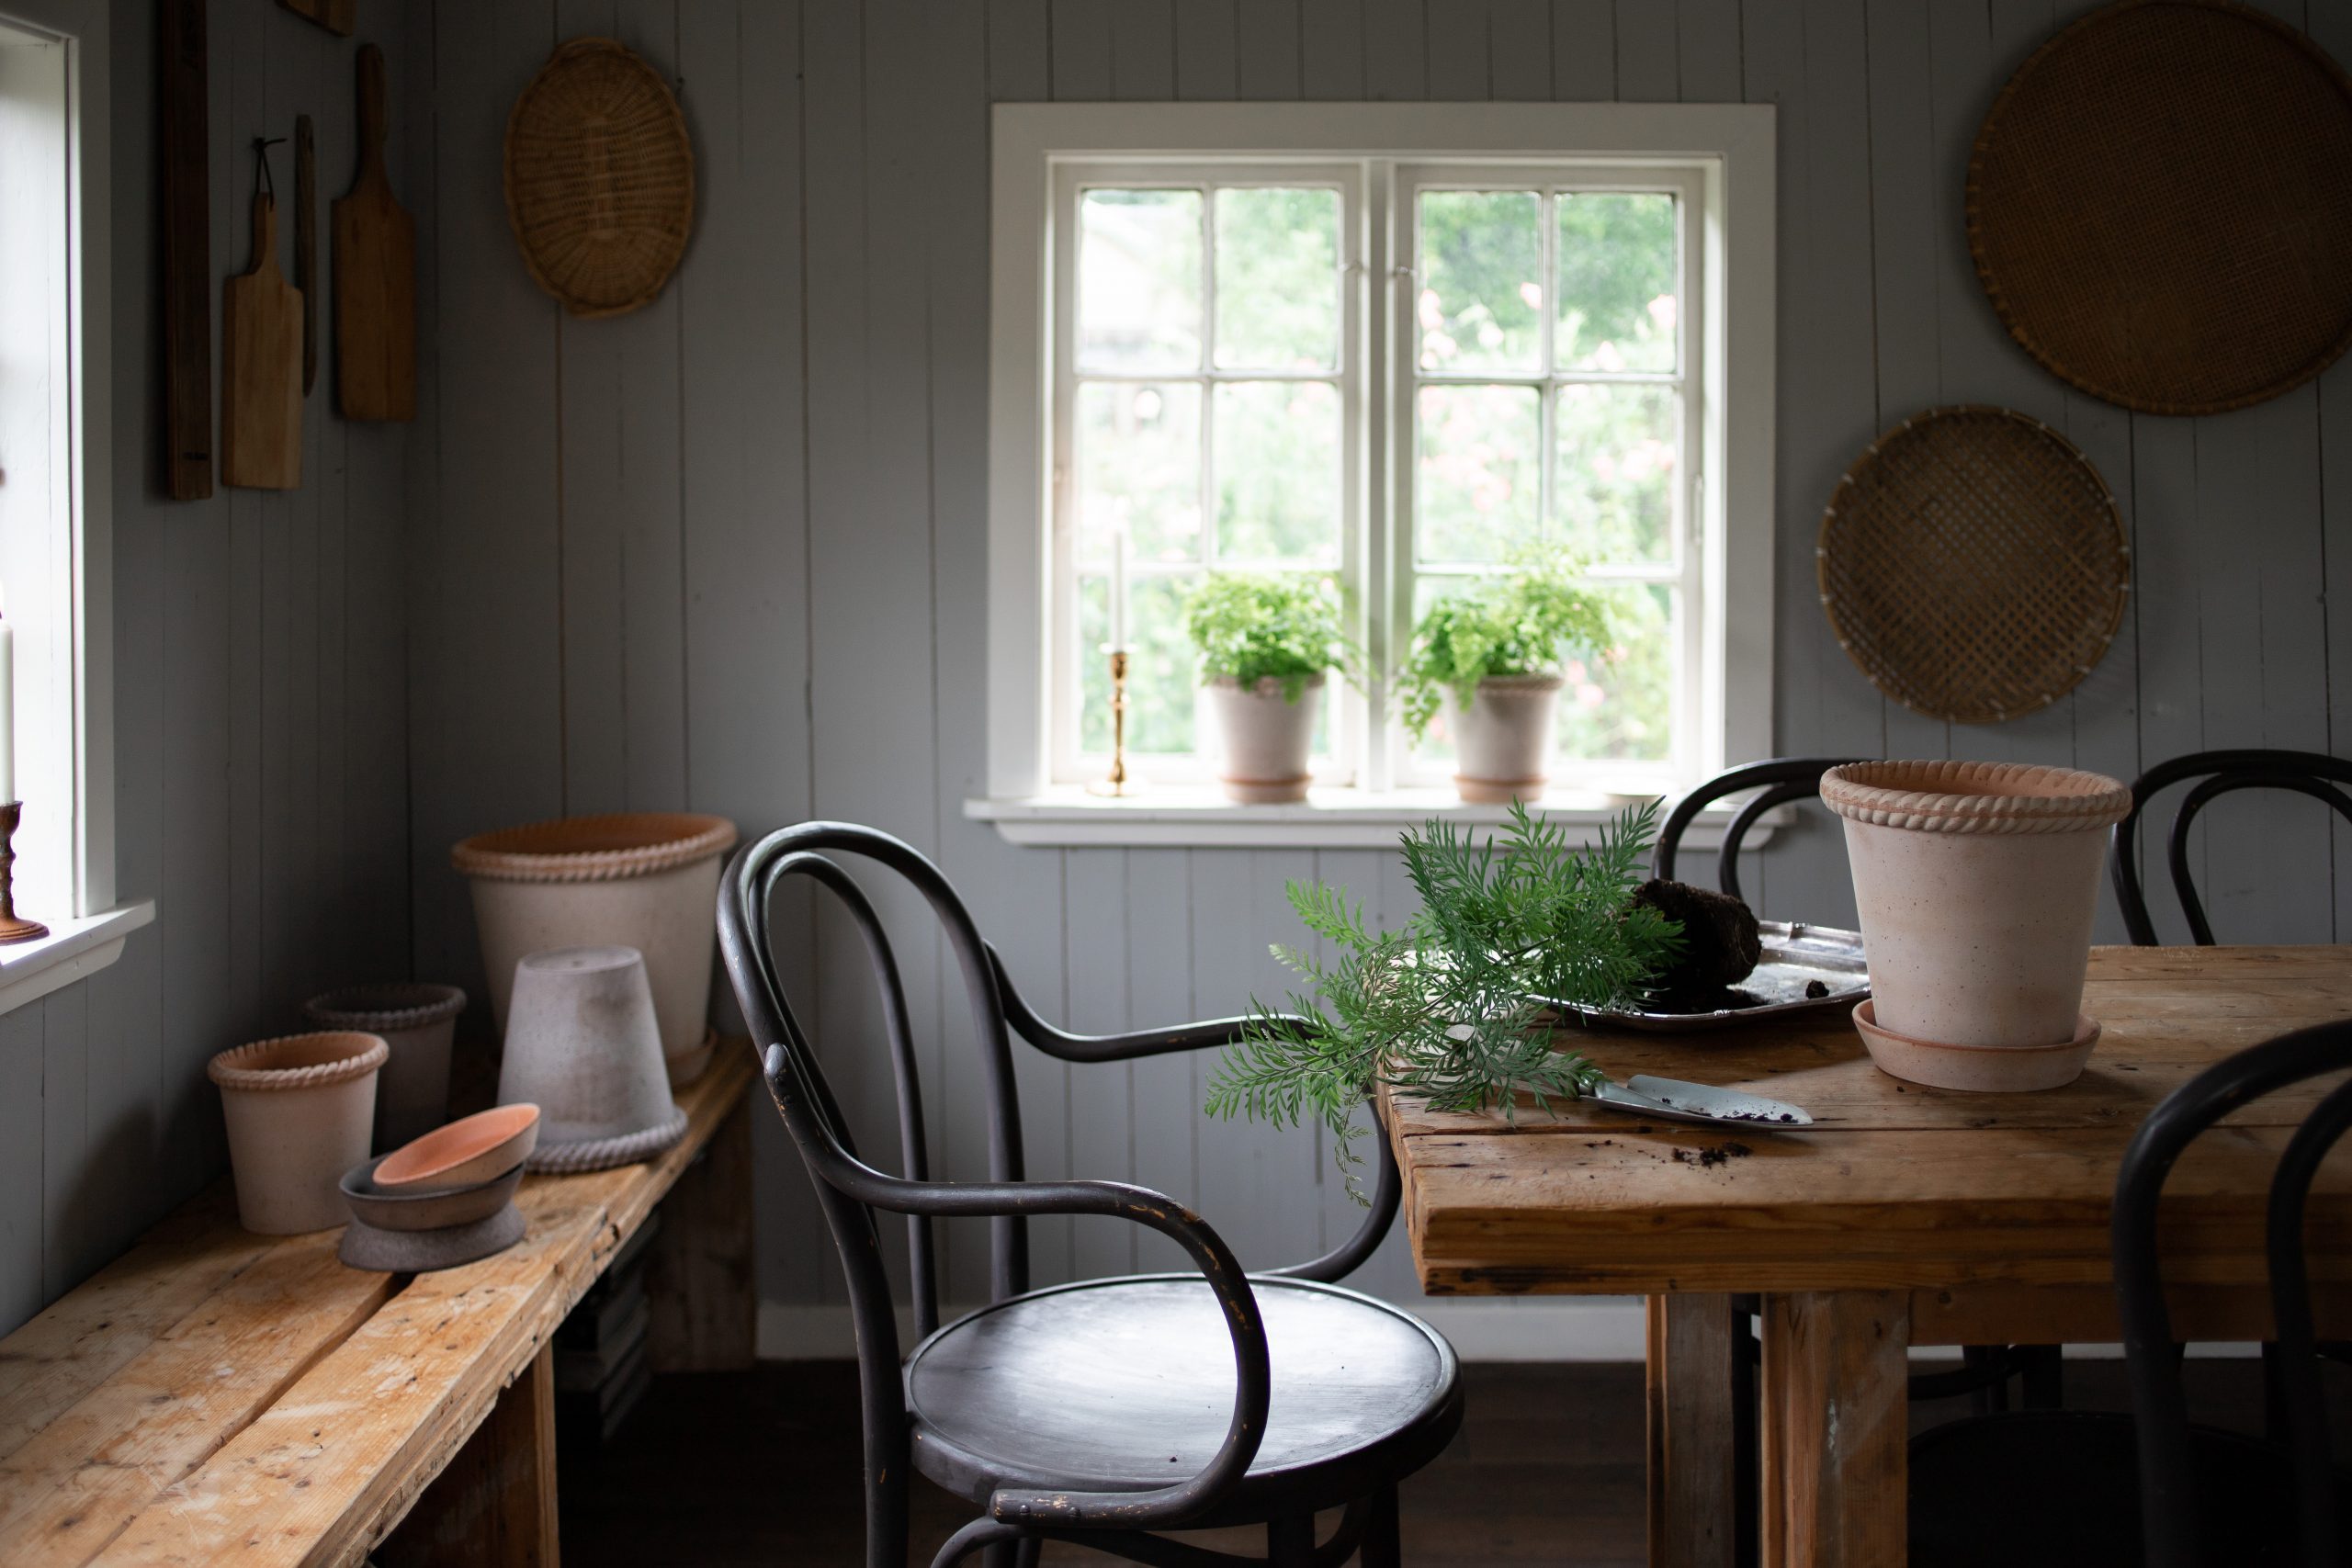 Elin Lannsjö: The Home Where Dahlia Grows